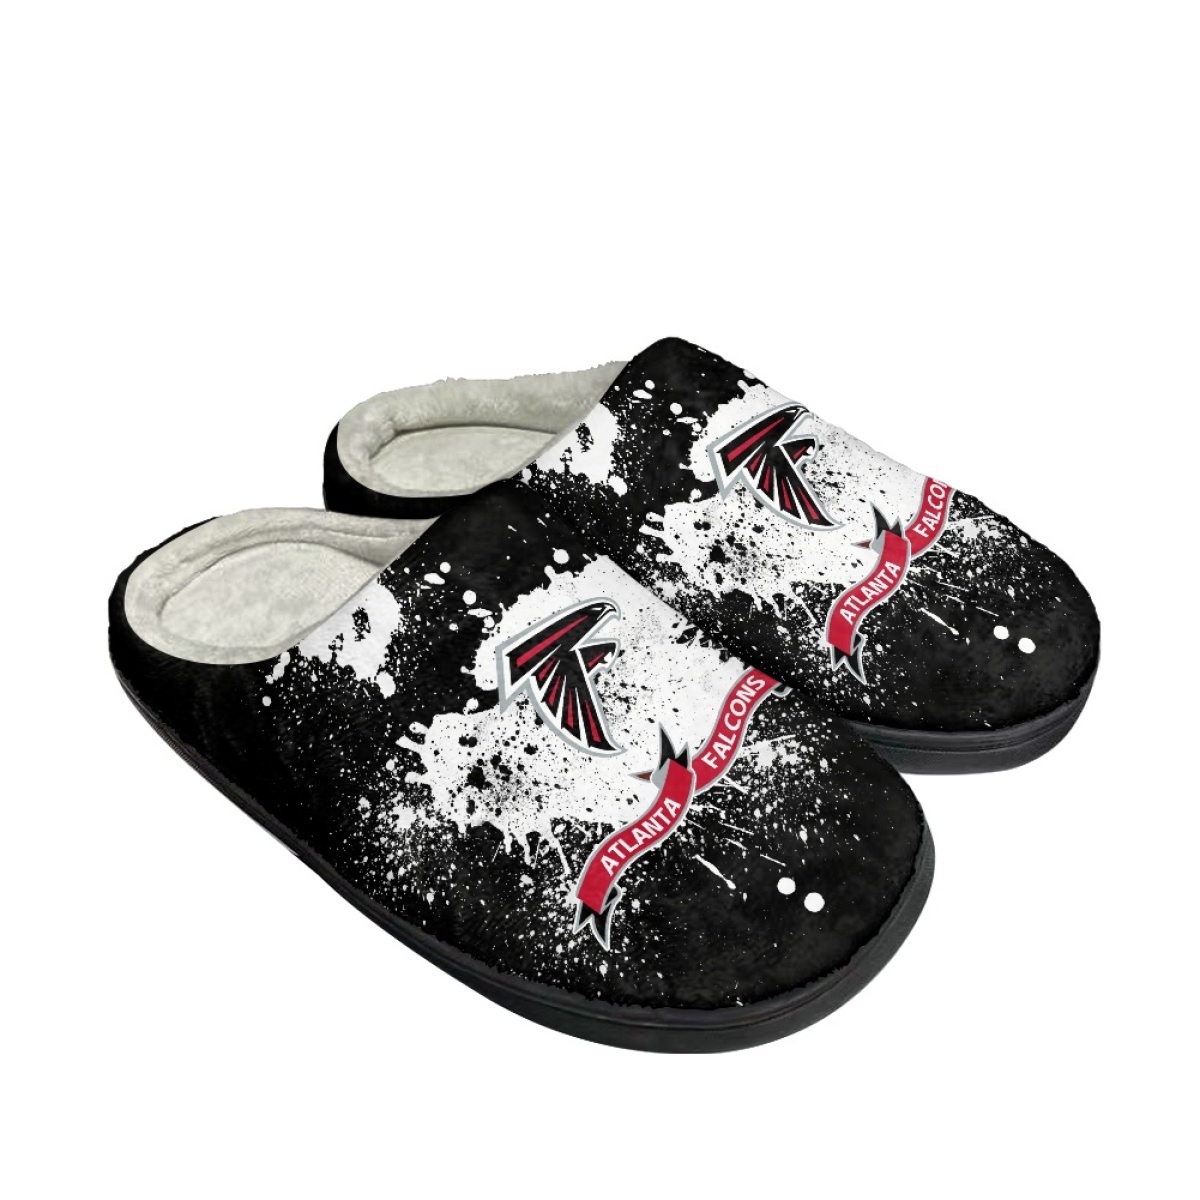 Men's Atlanta Falcons Slippers/Shoes 005